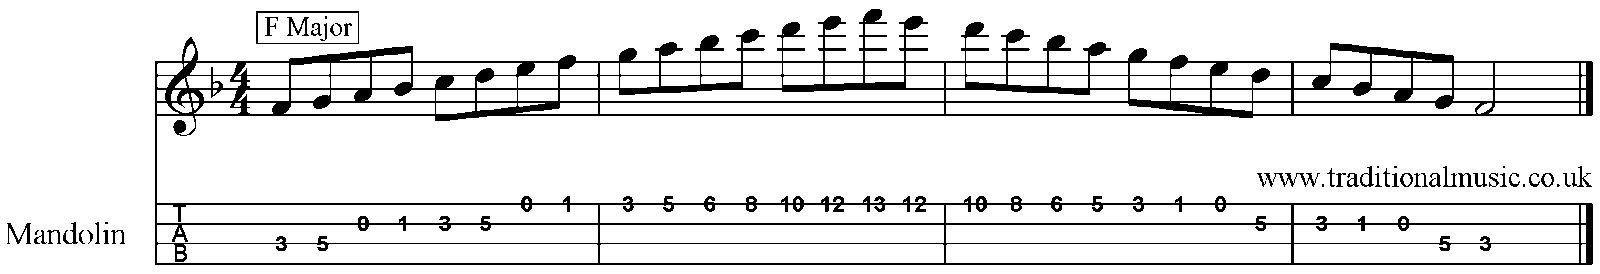 Major Scales for Mandolin A